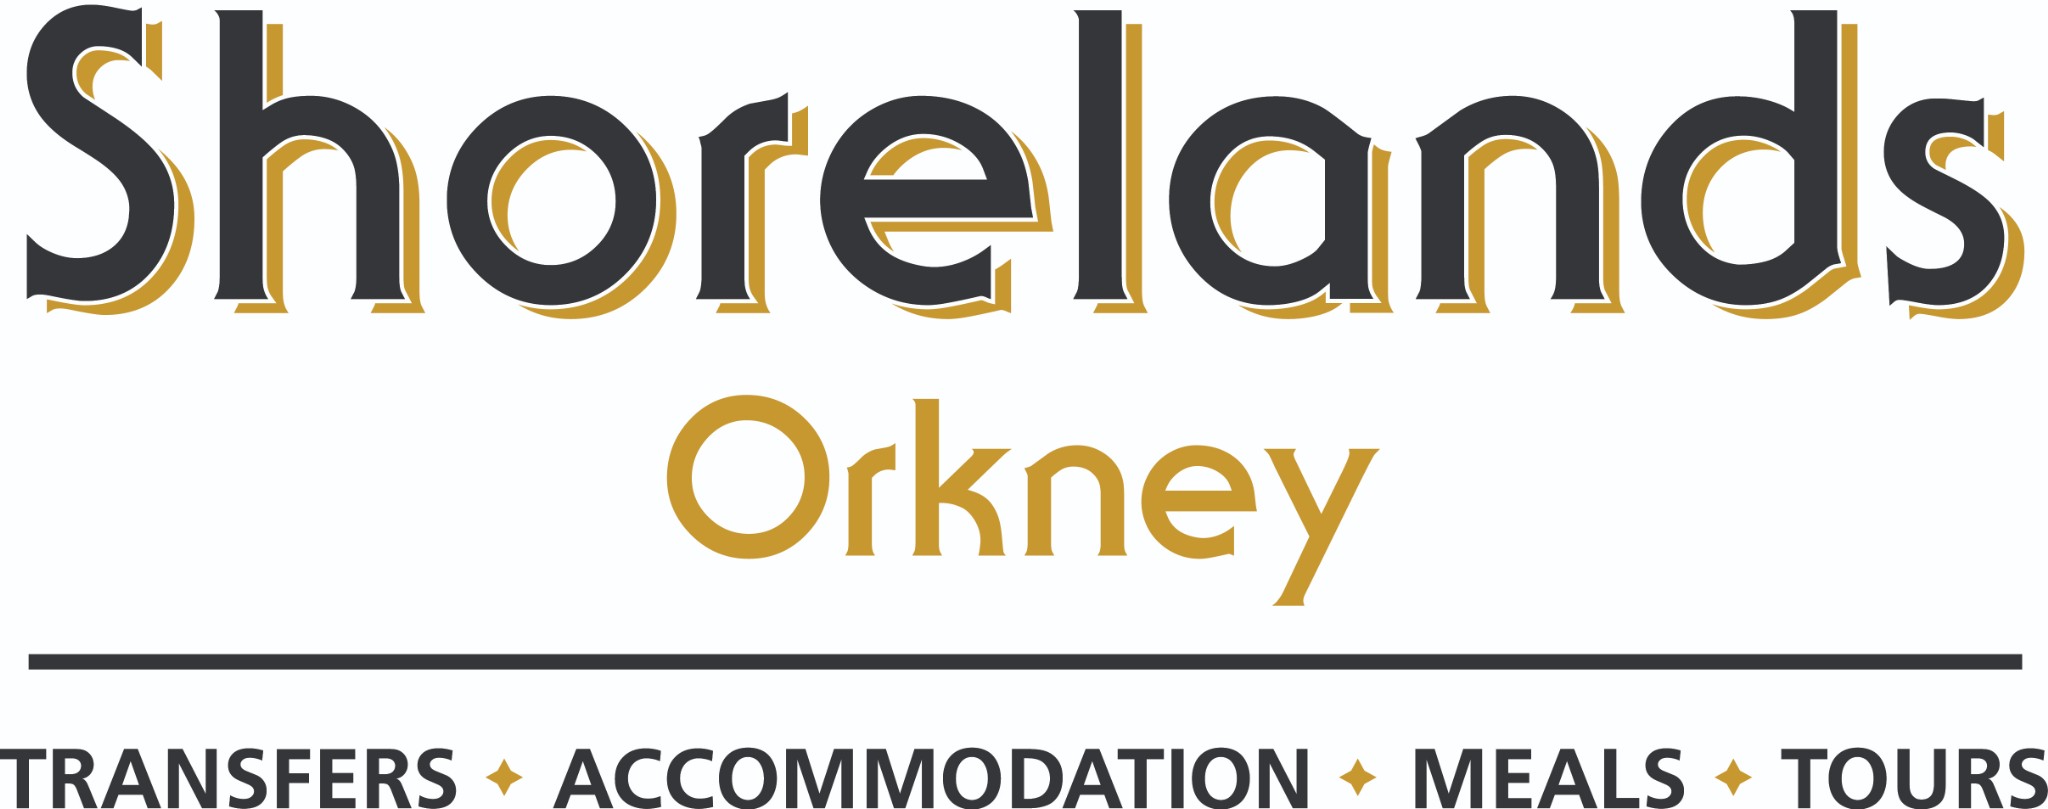 Shorelands Orkney - Transfers - Accommodation - Meals - Tours Logo